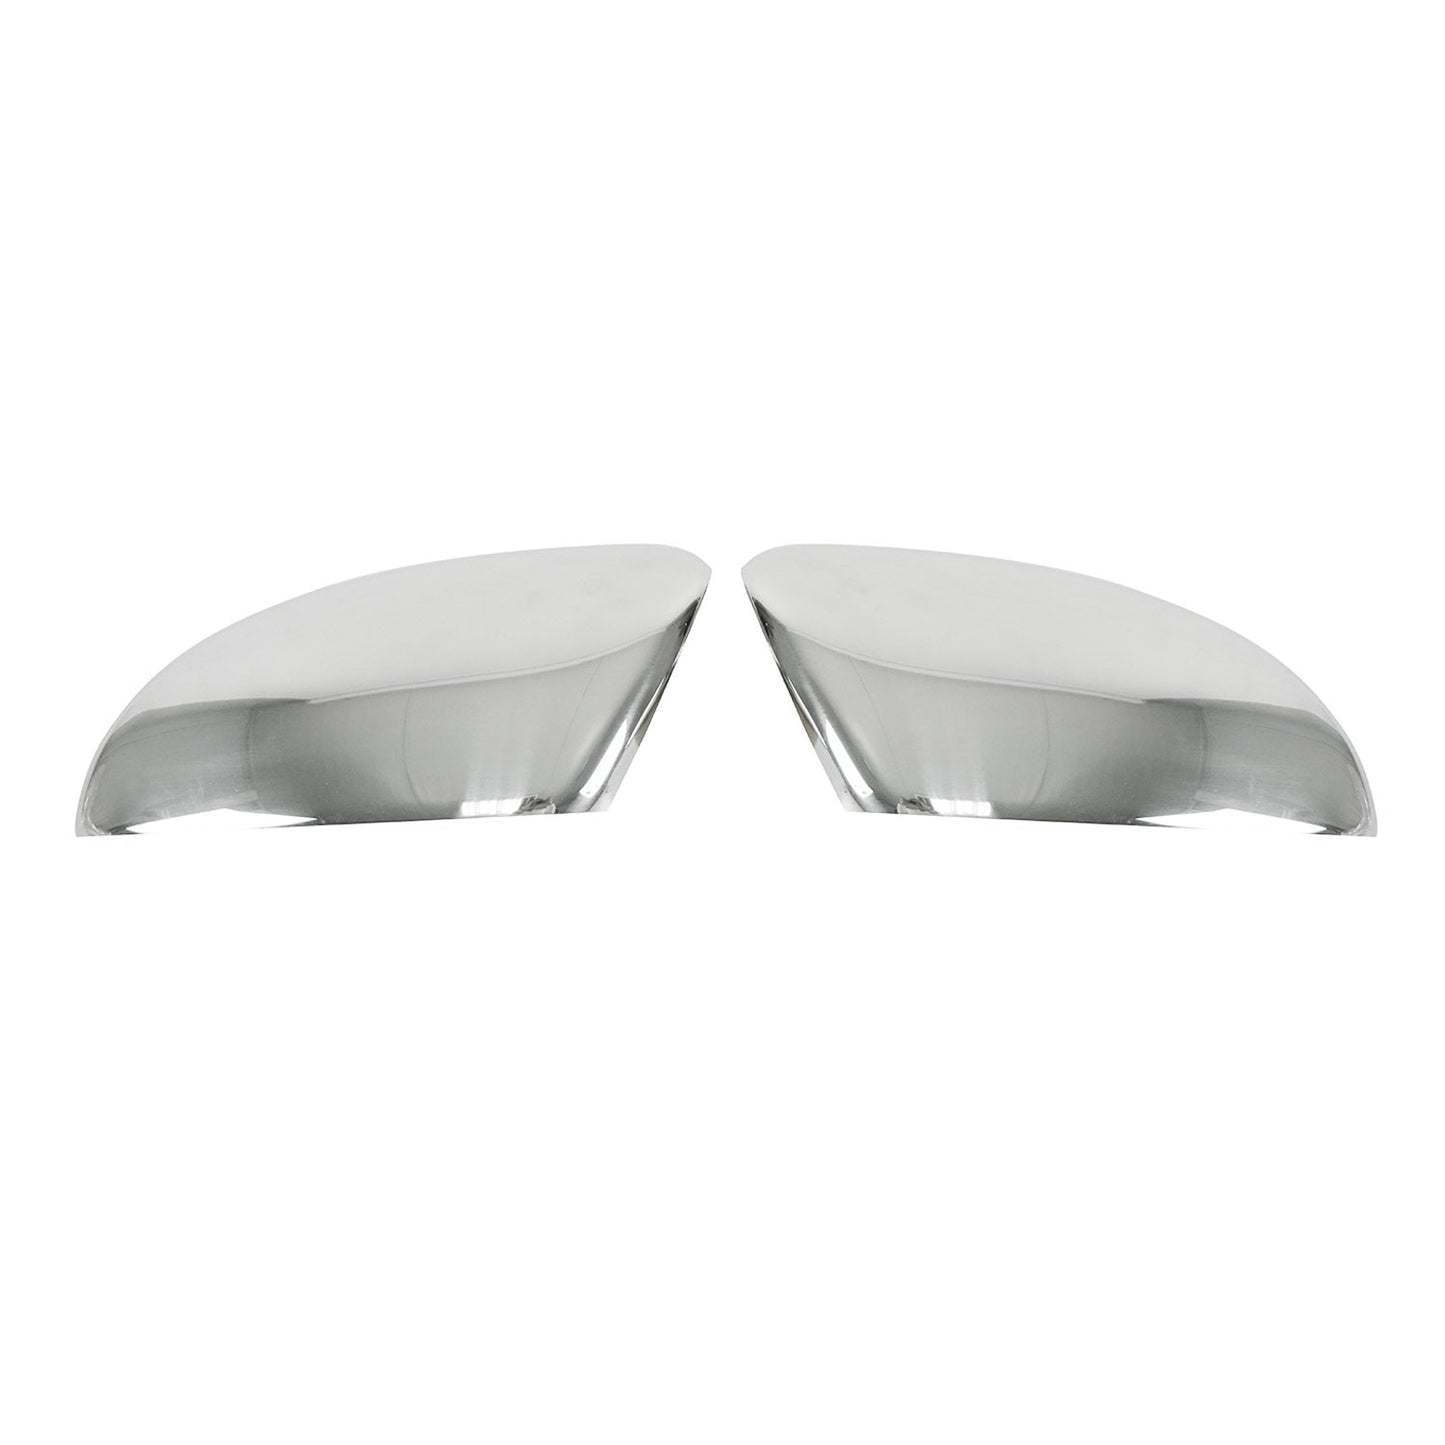 OMAC Side Mirror Cover Caps Fits VW EOS 2012-2016 Steel Silver 2 Pcs U001743